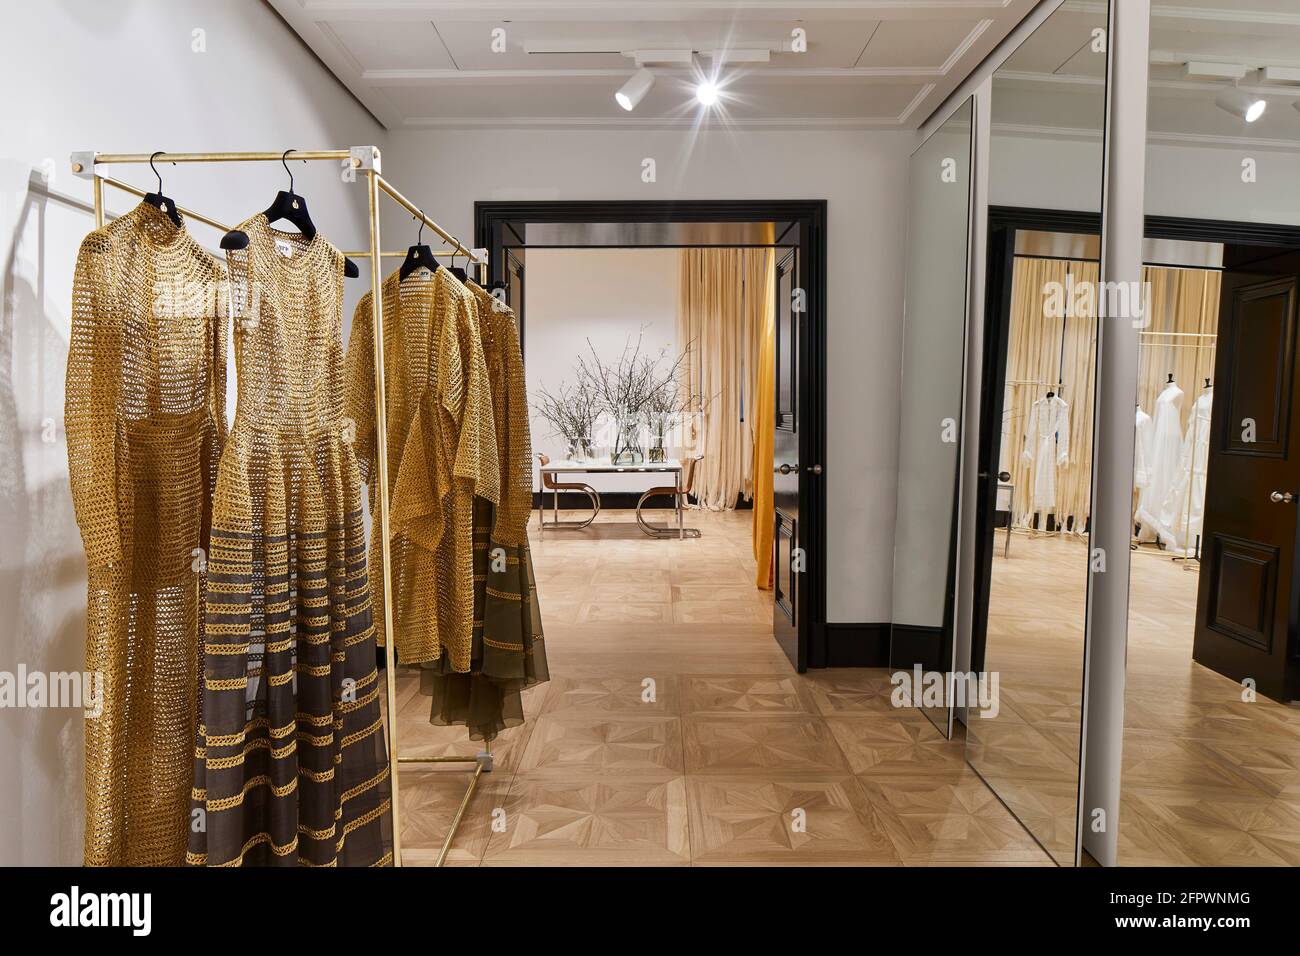 Store interior. Maison Rabih Kayrouz Boutique, London, United Kingdom. Architect: n/a, 2020. Stock Photo